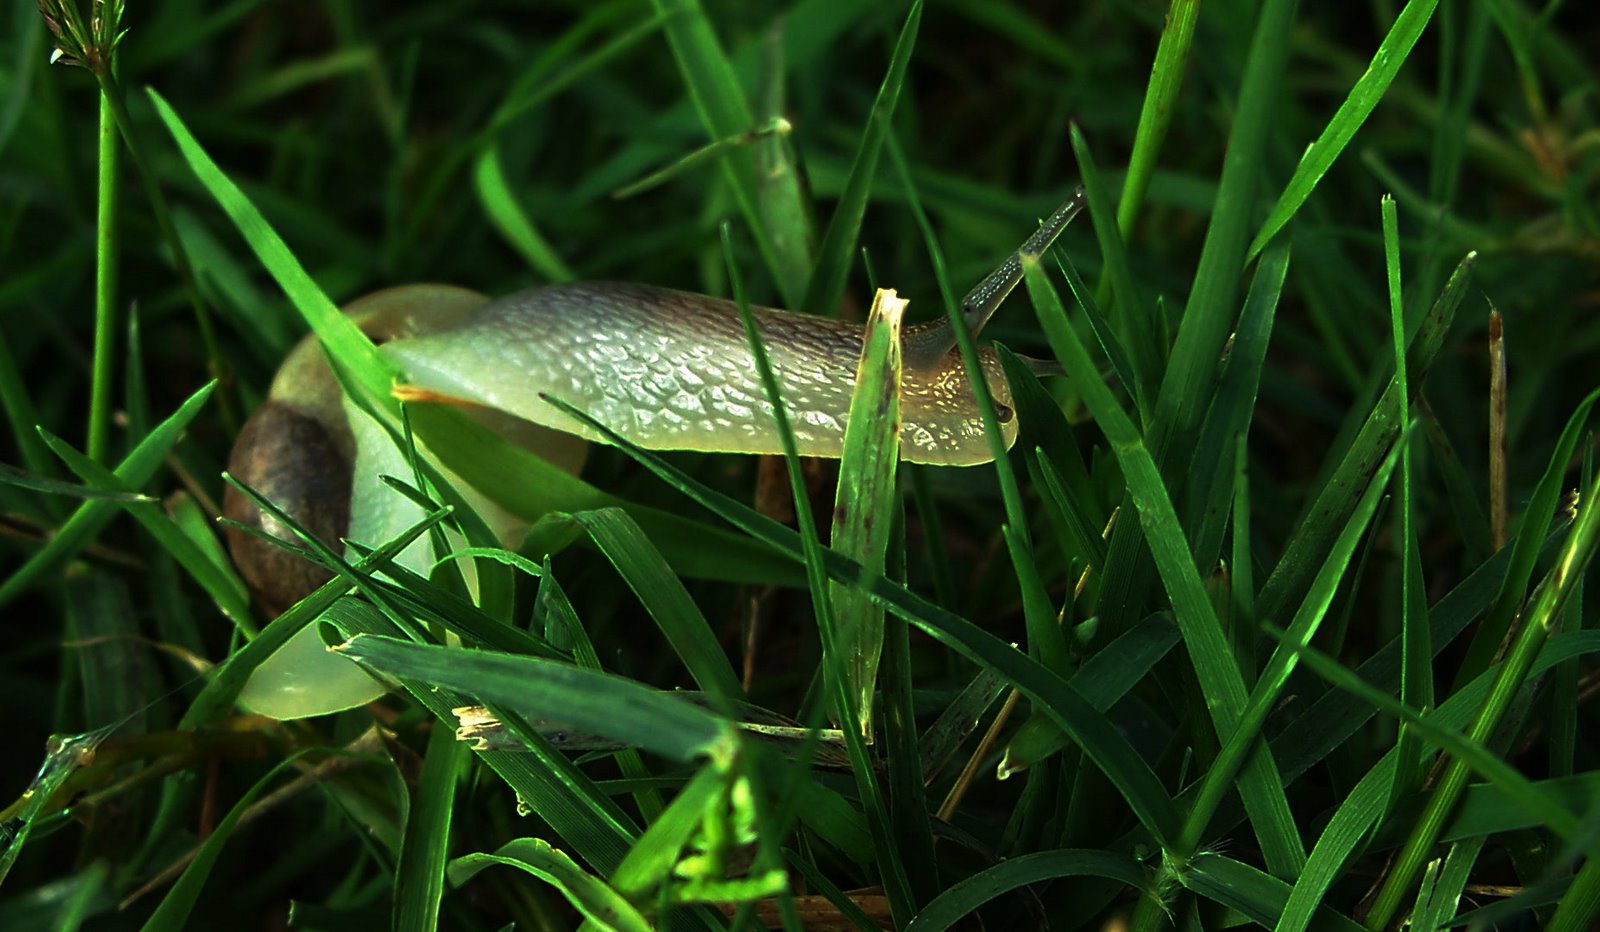 Photo description: snail on the grass